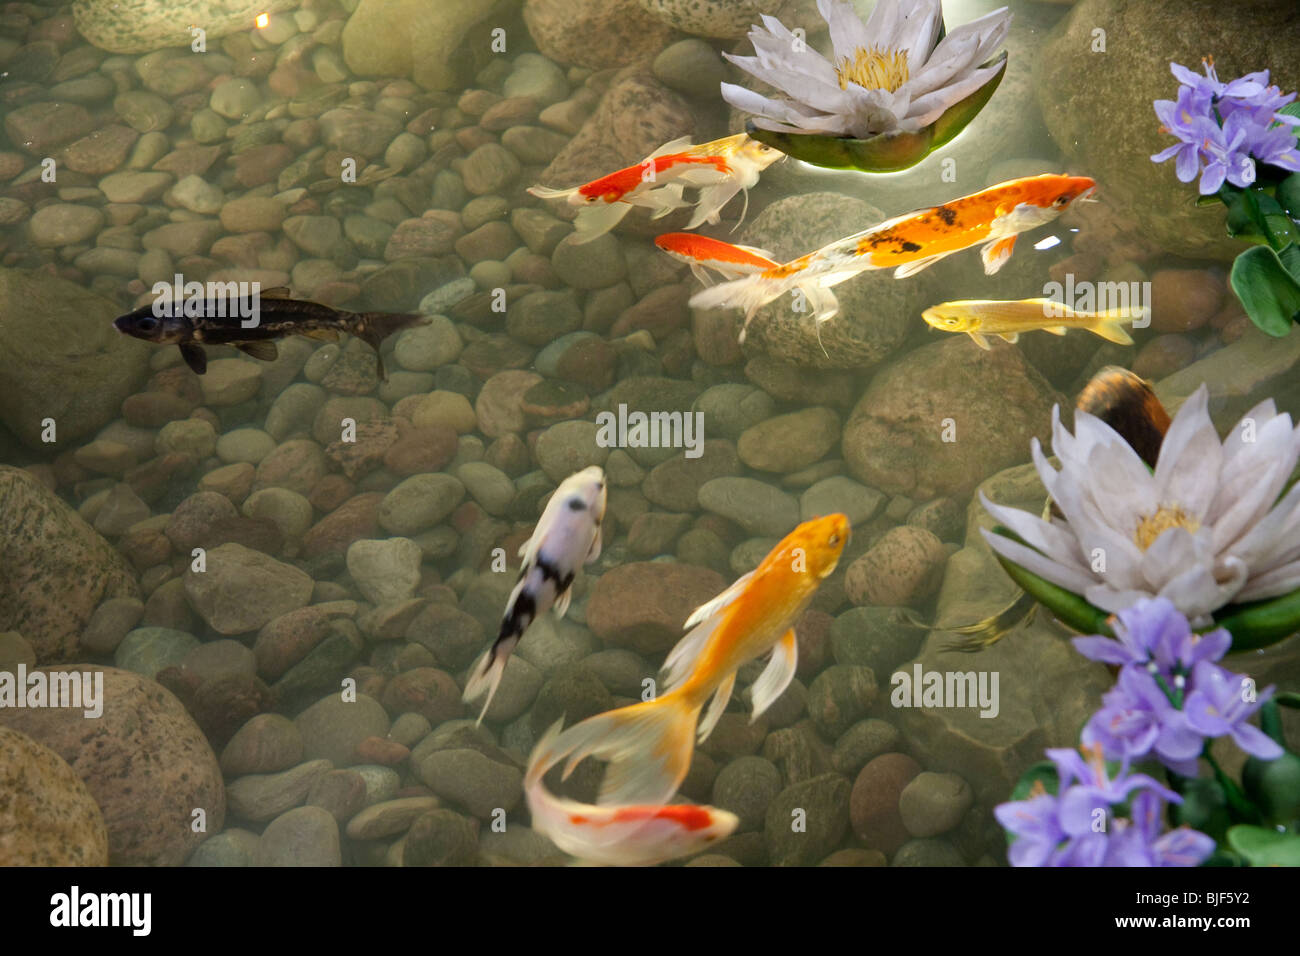 artificial pond rock stone fish swim show flower Stock Photo